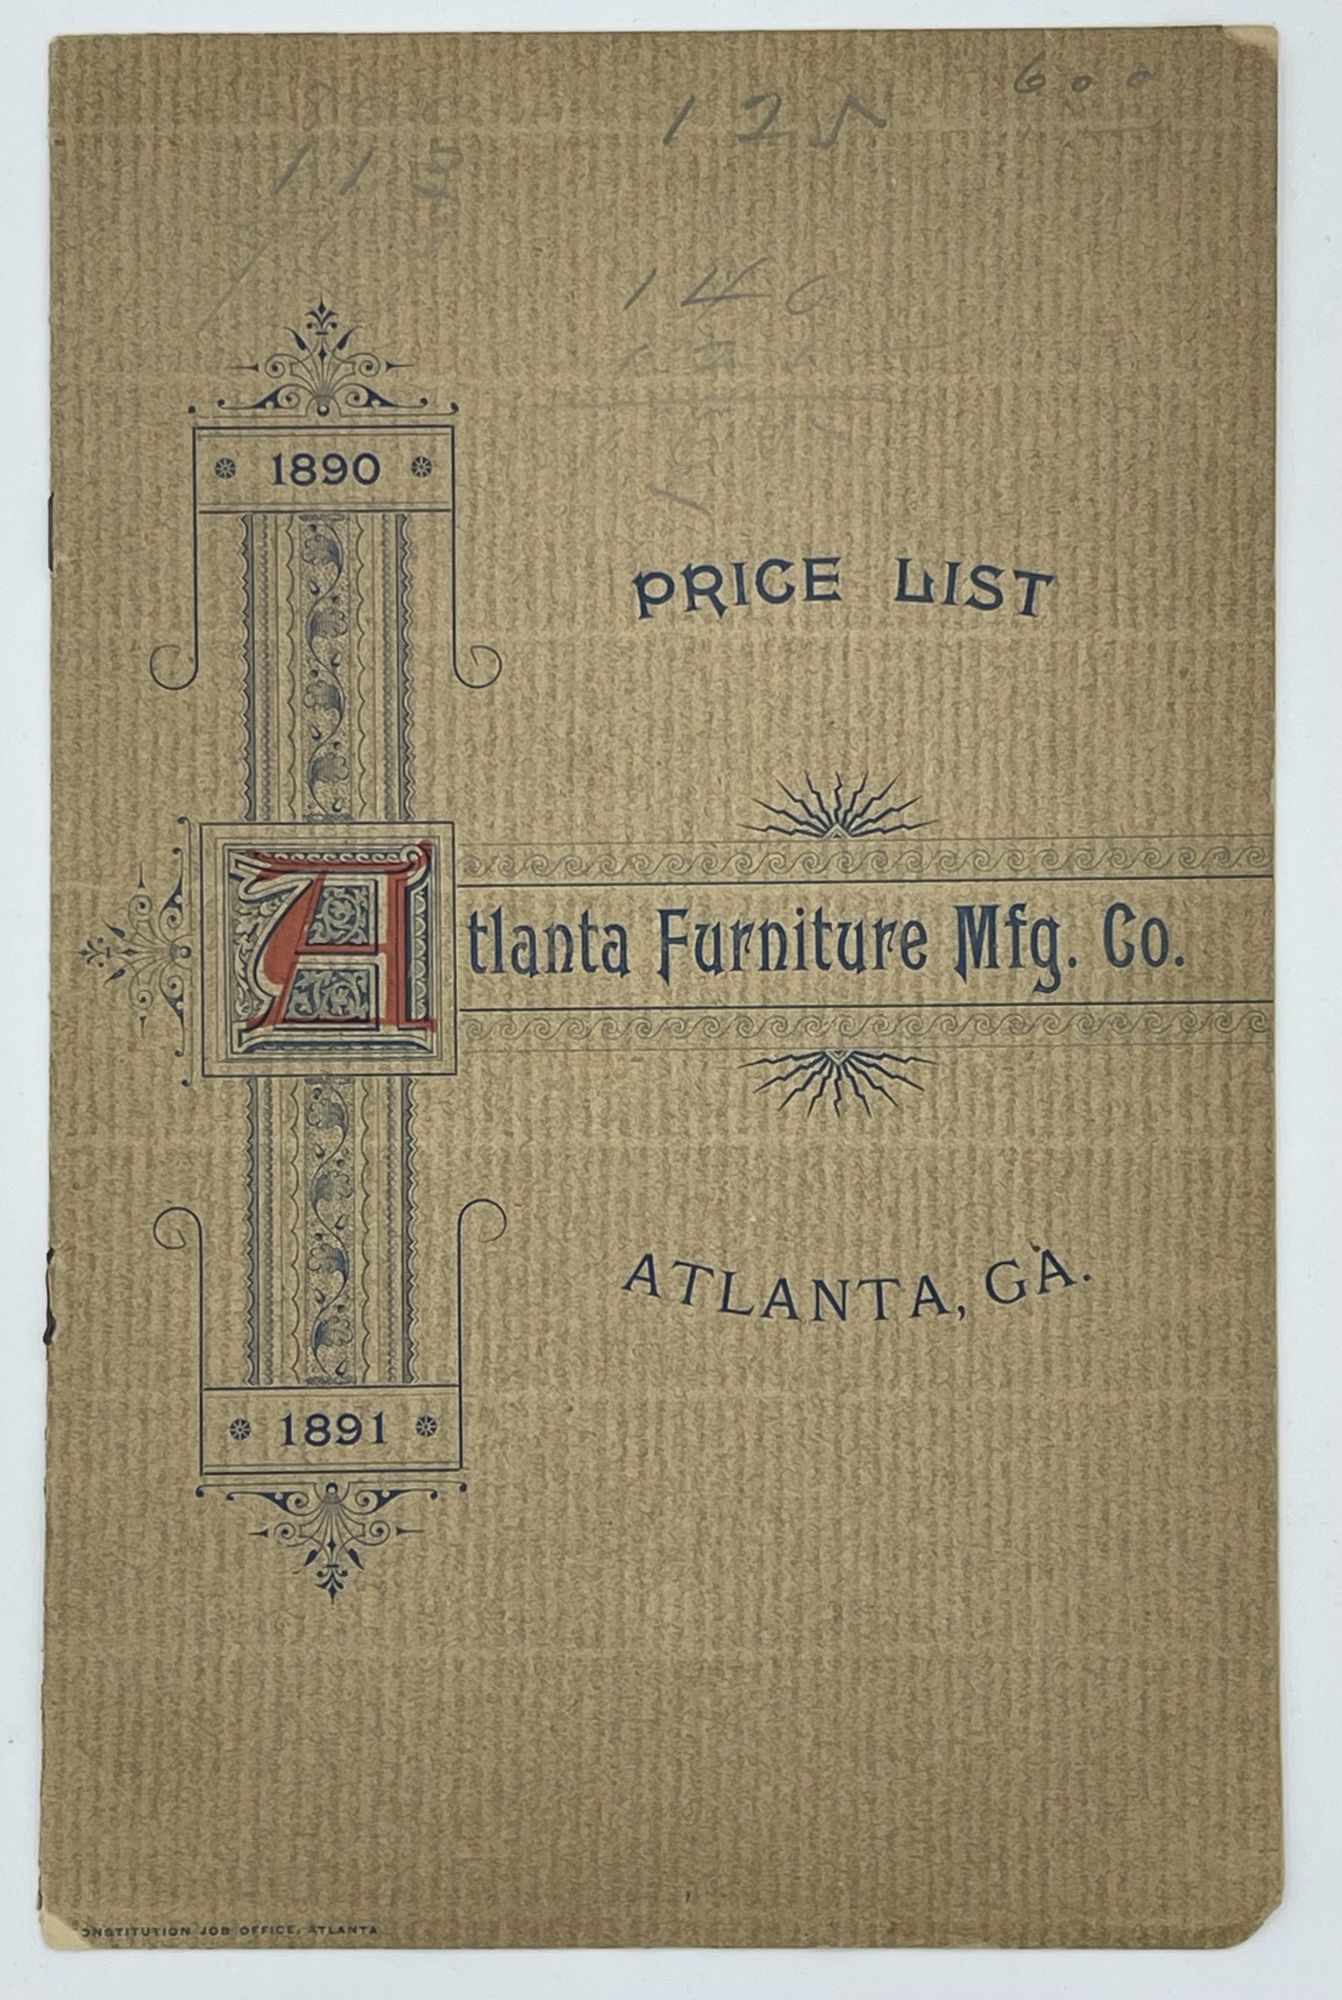 Price List Of The Atlanta Furniture Mfg. Co.